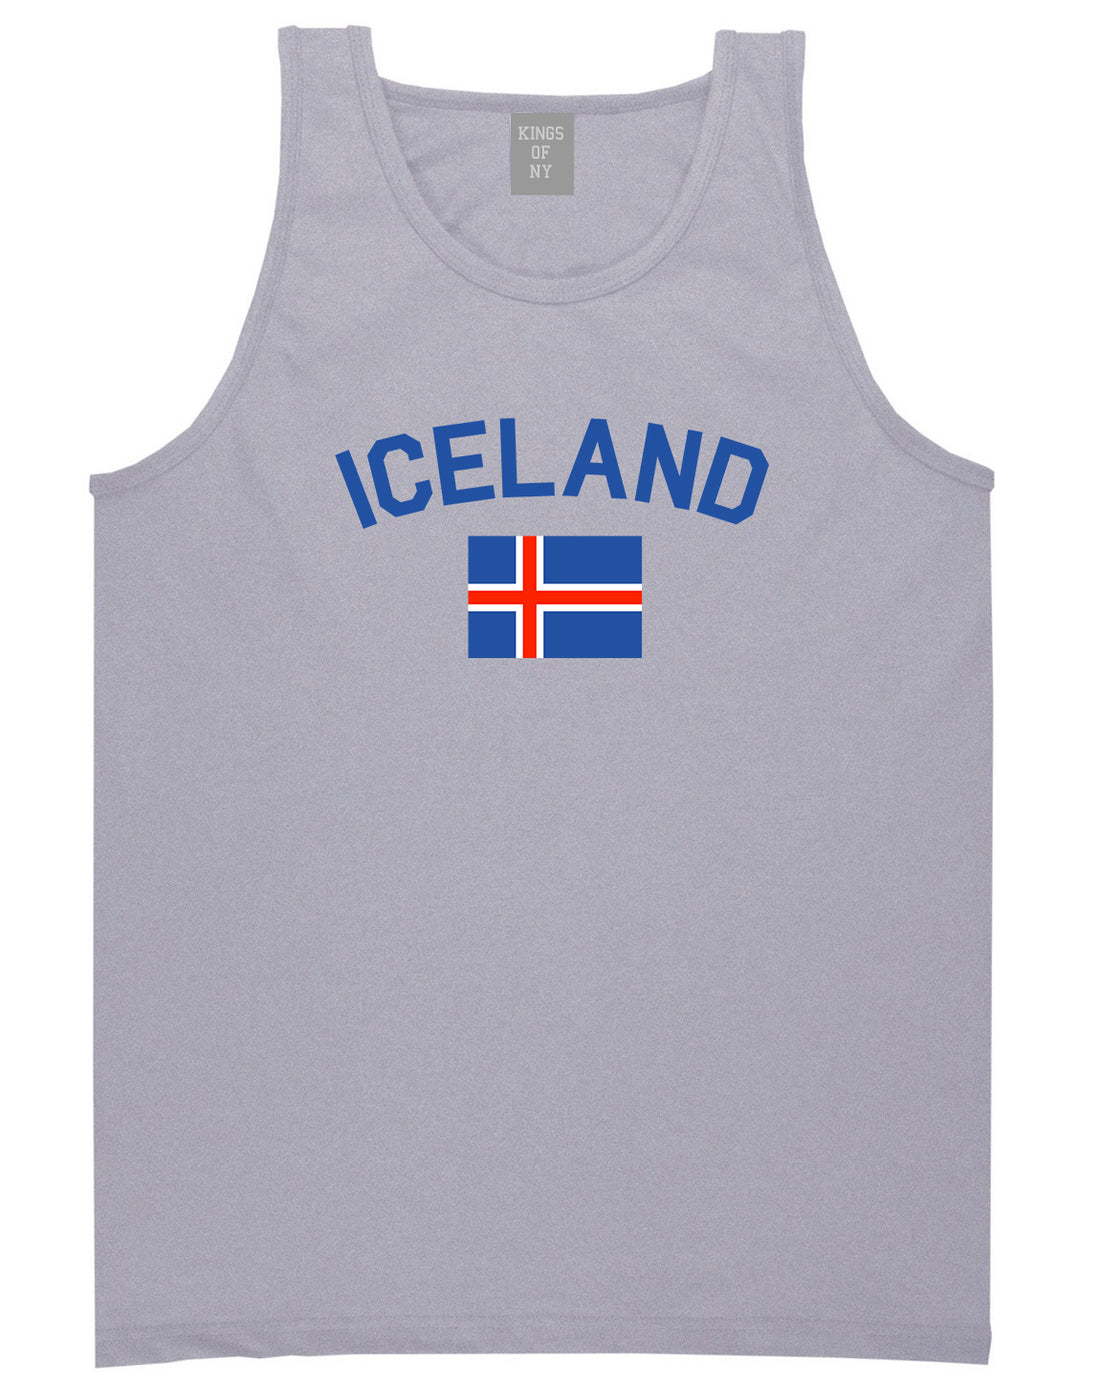 Iceland With Icelandic Flag Souvenir Mens Tank Top Shirt Grey